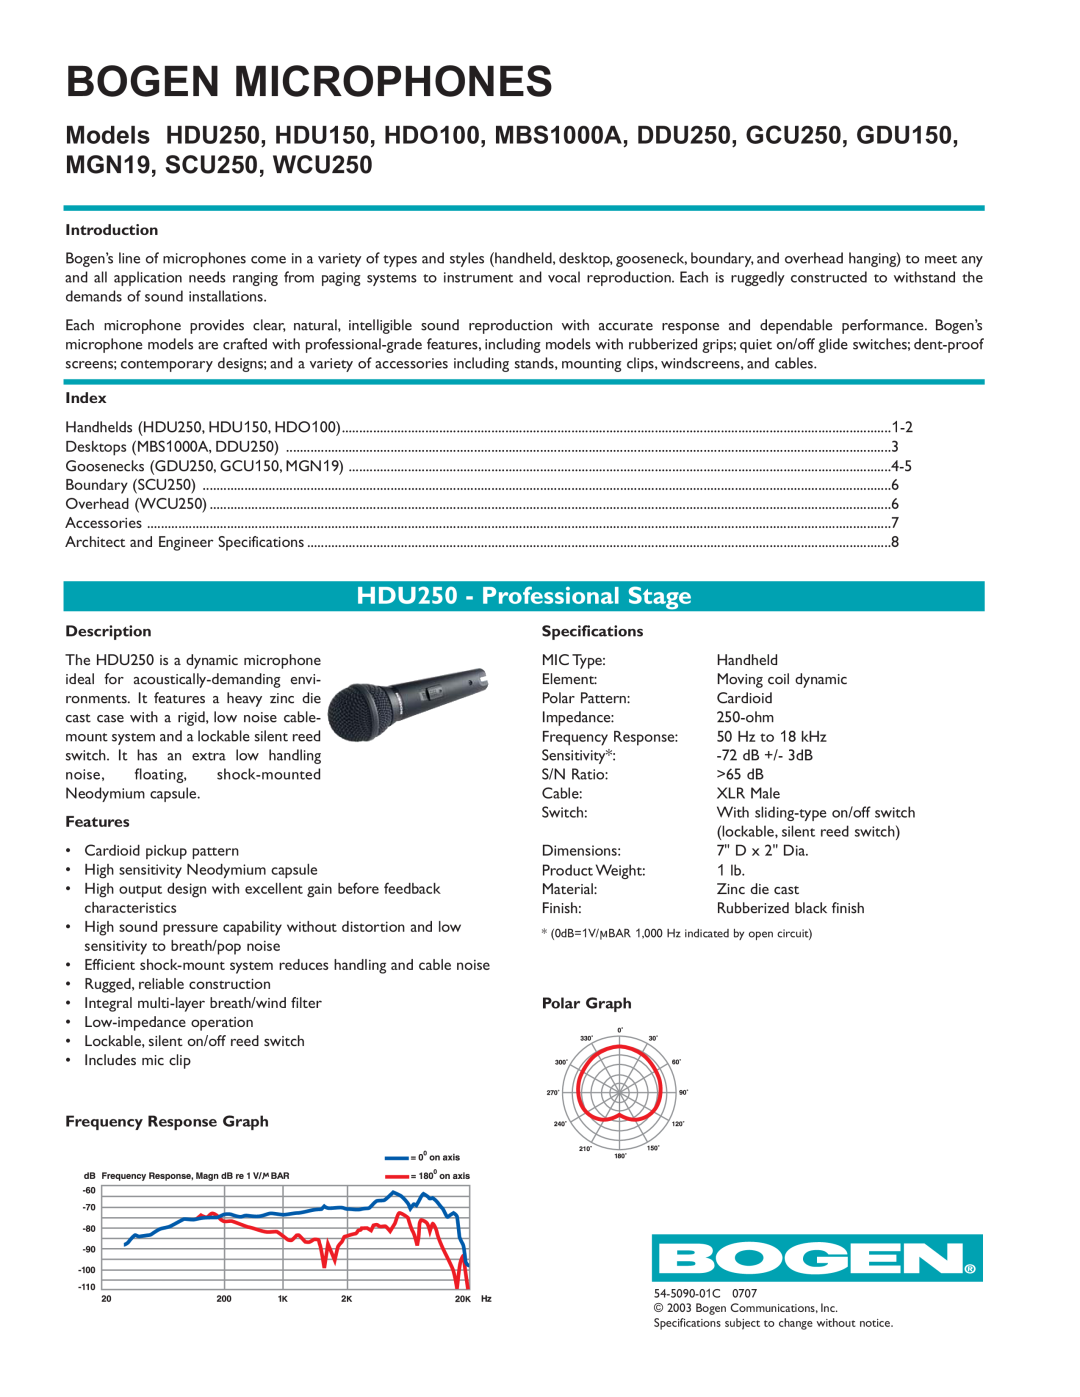 Bogen specifications Model GDU150 Dynamic Gooseneck Microphone, Polar Graph, Description, Specifications 